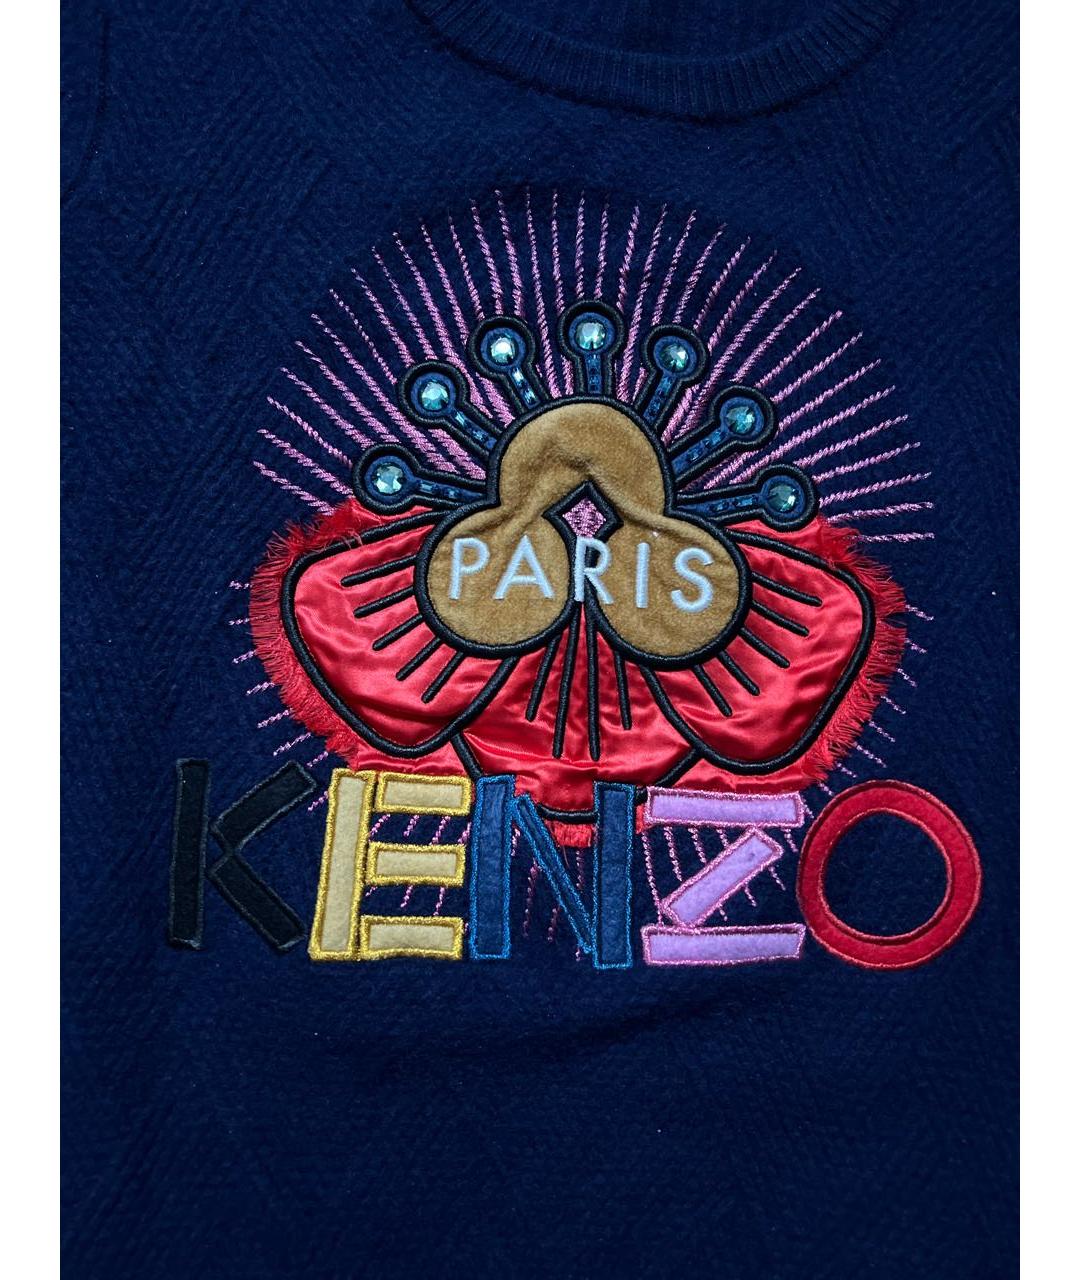 KENZO Темно-синий шерстяной джемпер / свитер, фото 4